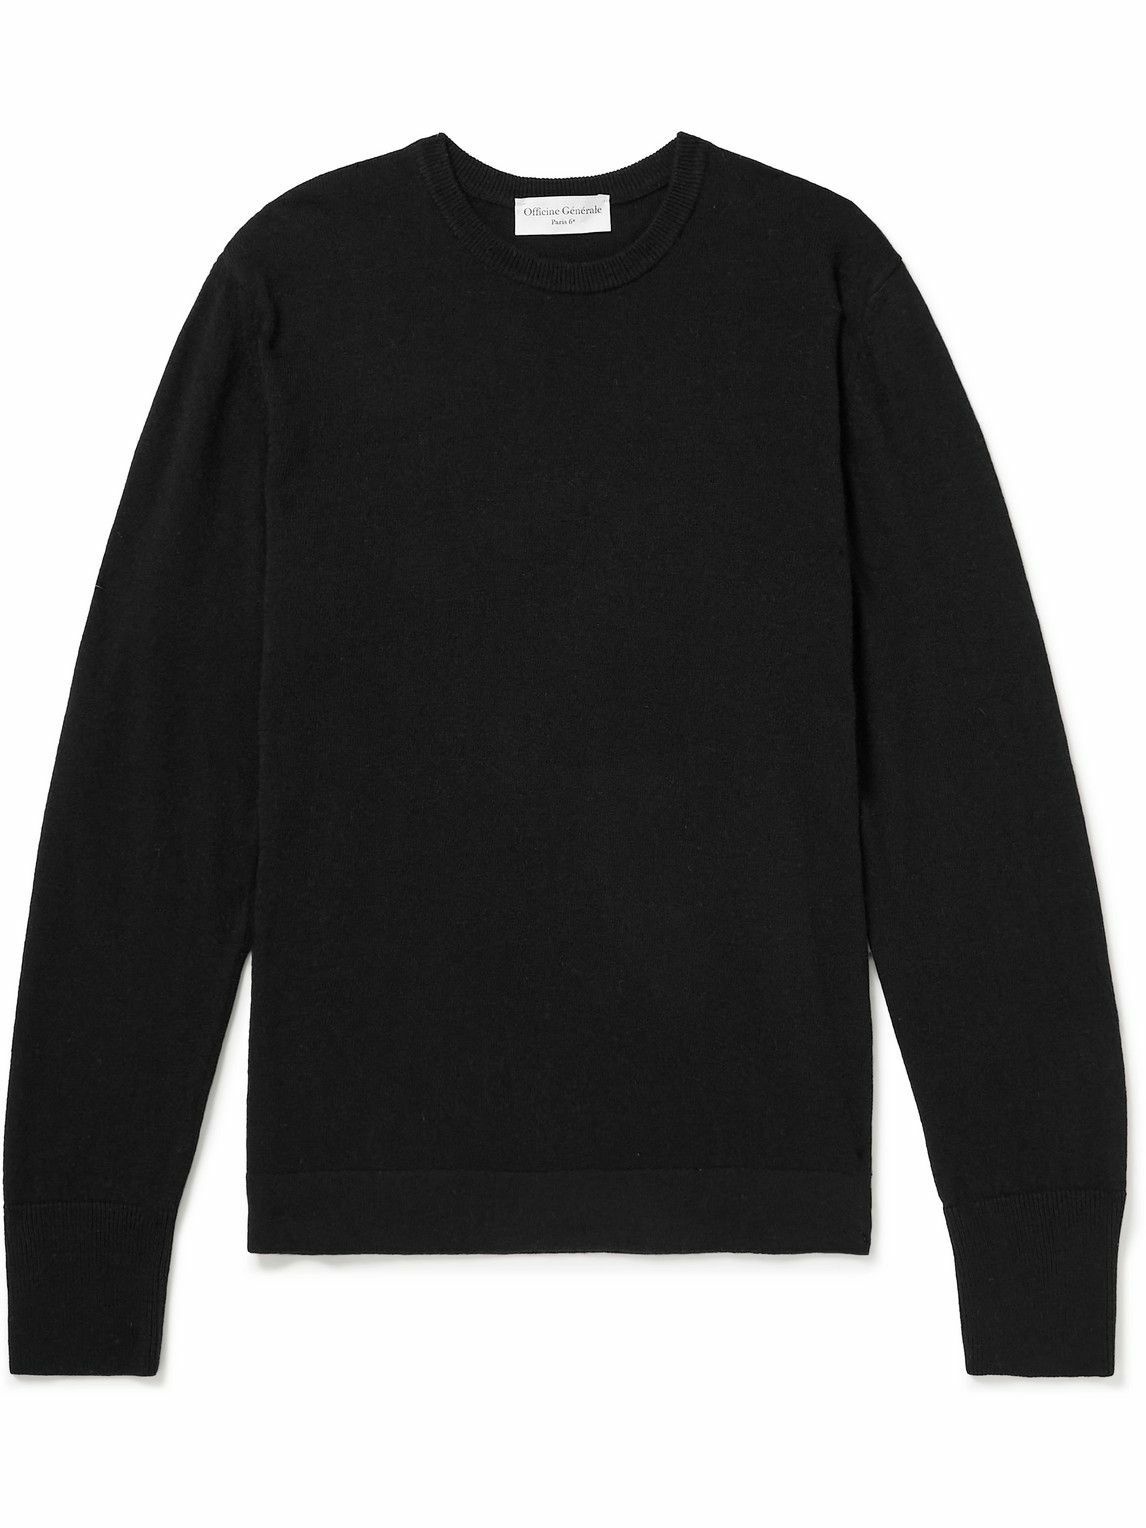 Officine Générale - Knitted Sweater - Black Officine Generale